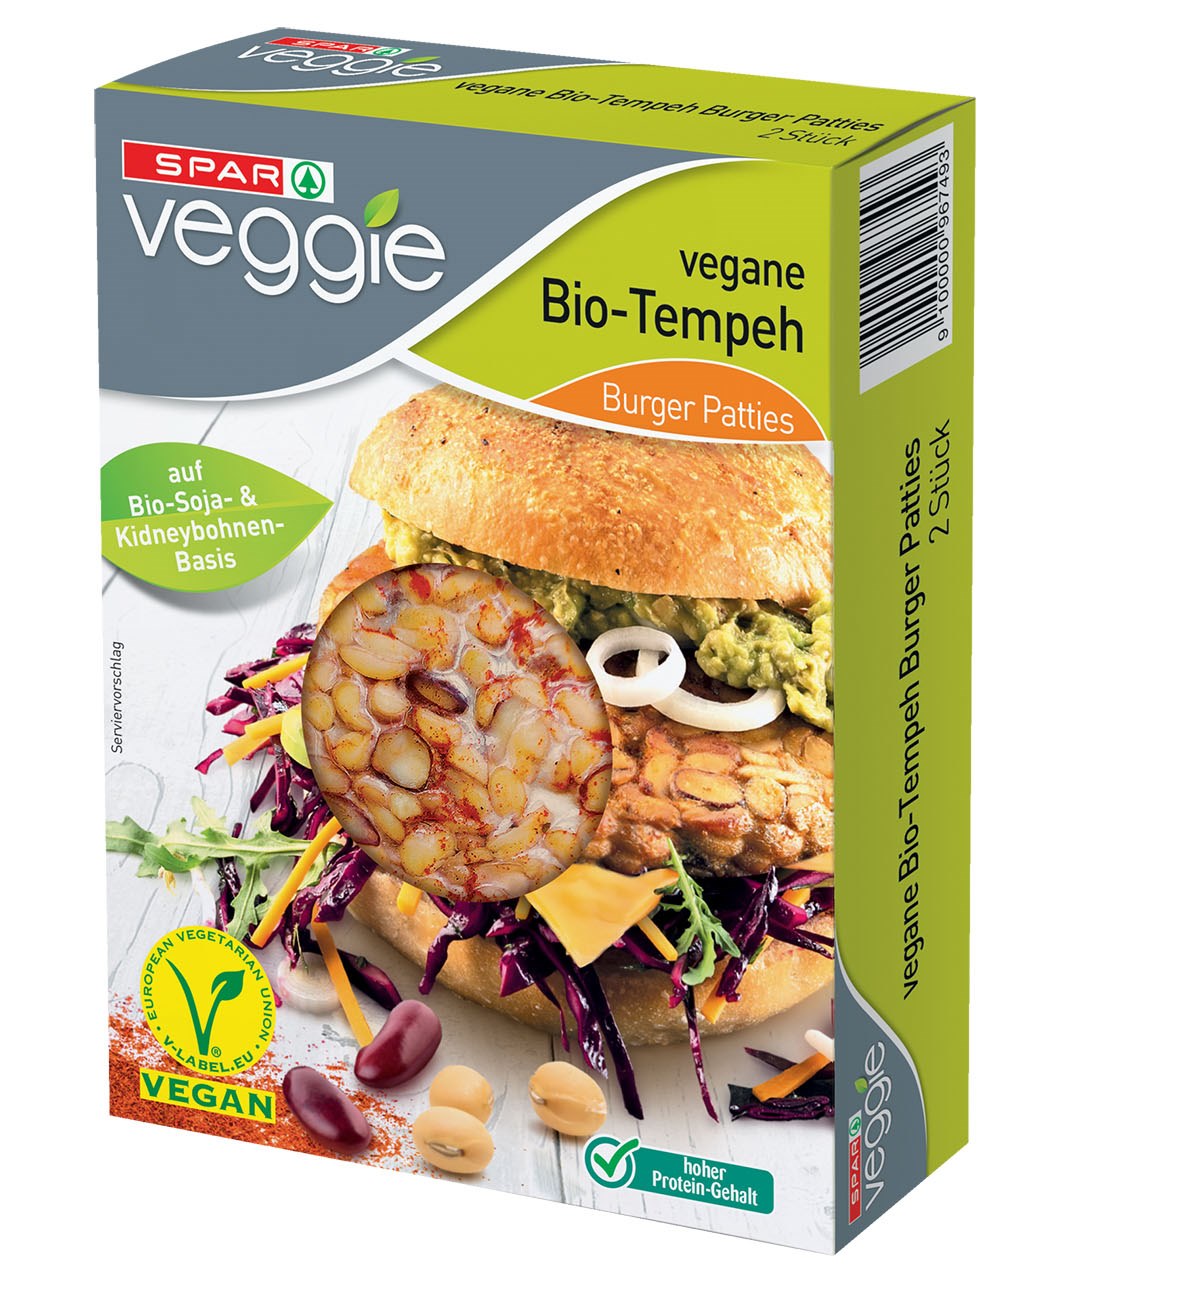 SPAR Veggie vegane Bio-Tempeh Burger Patties